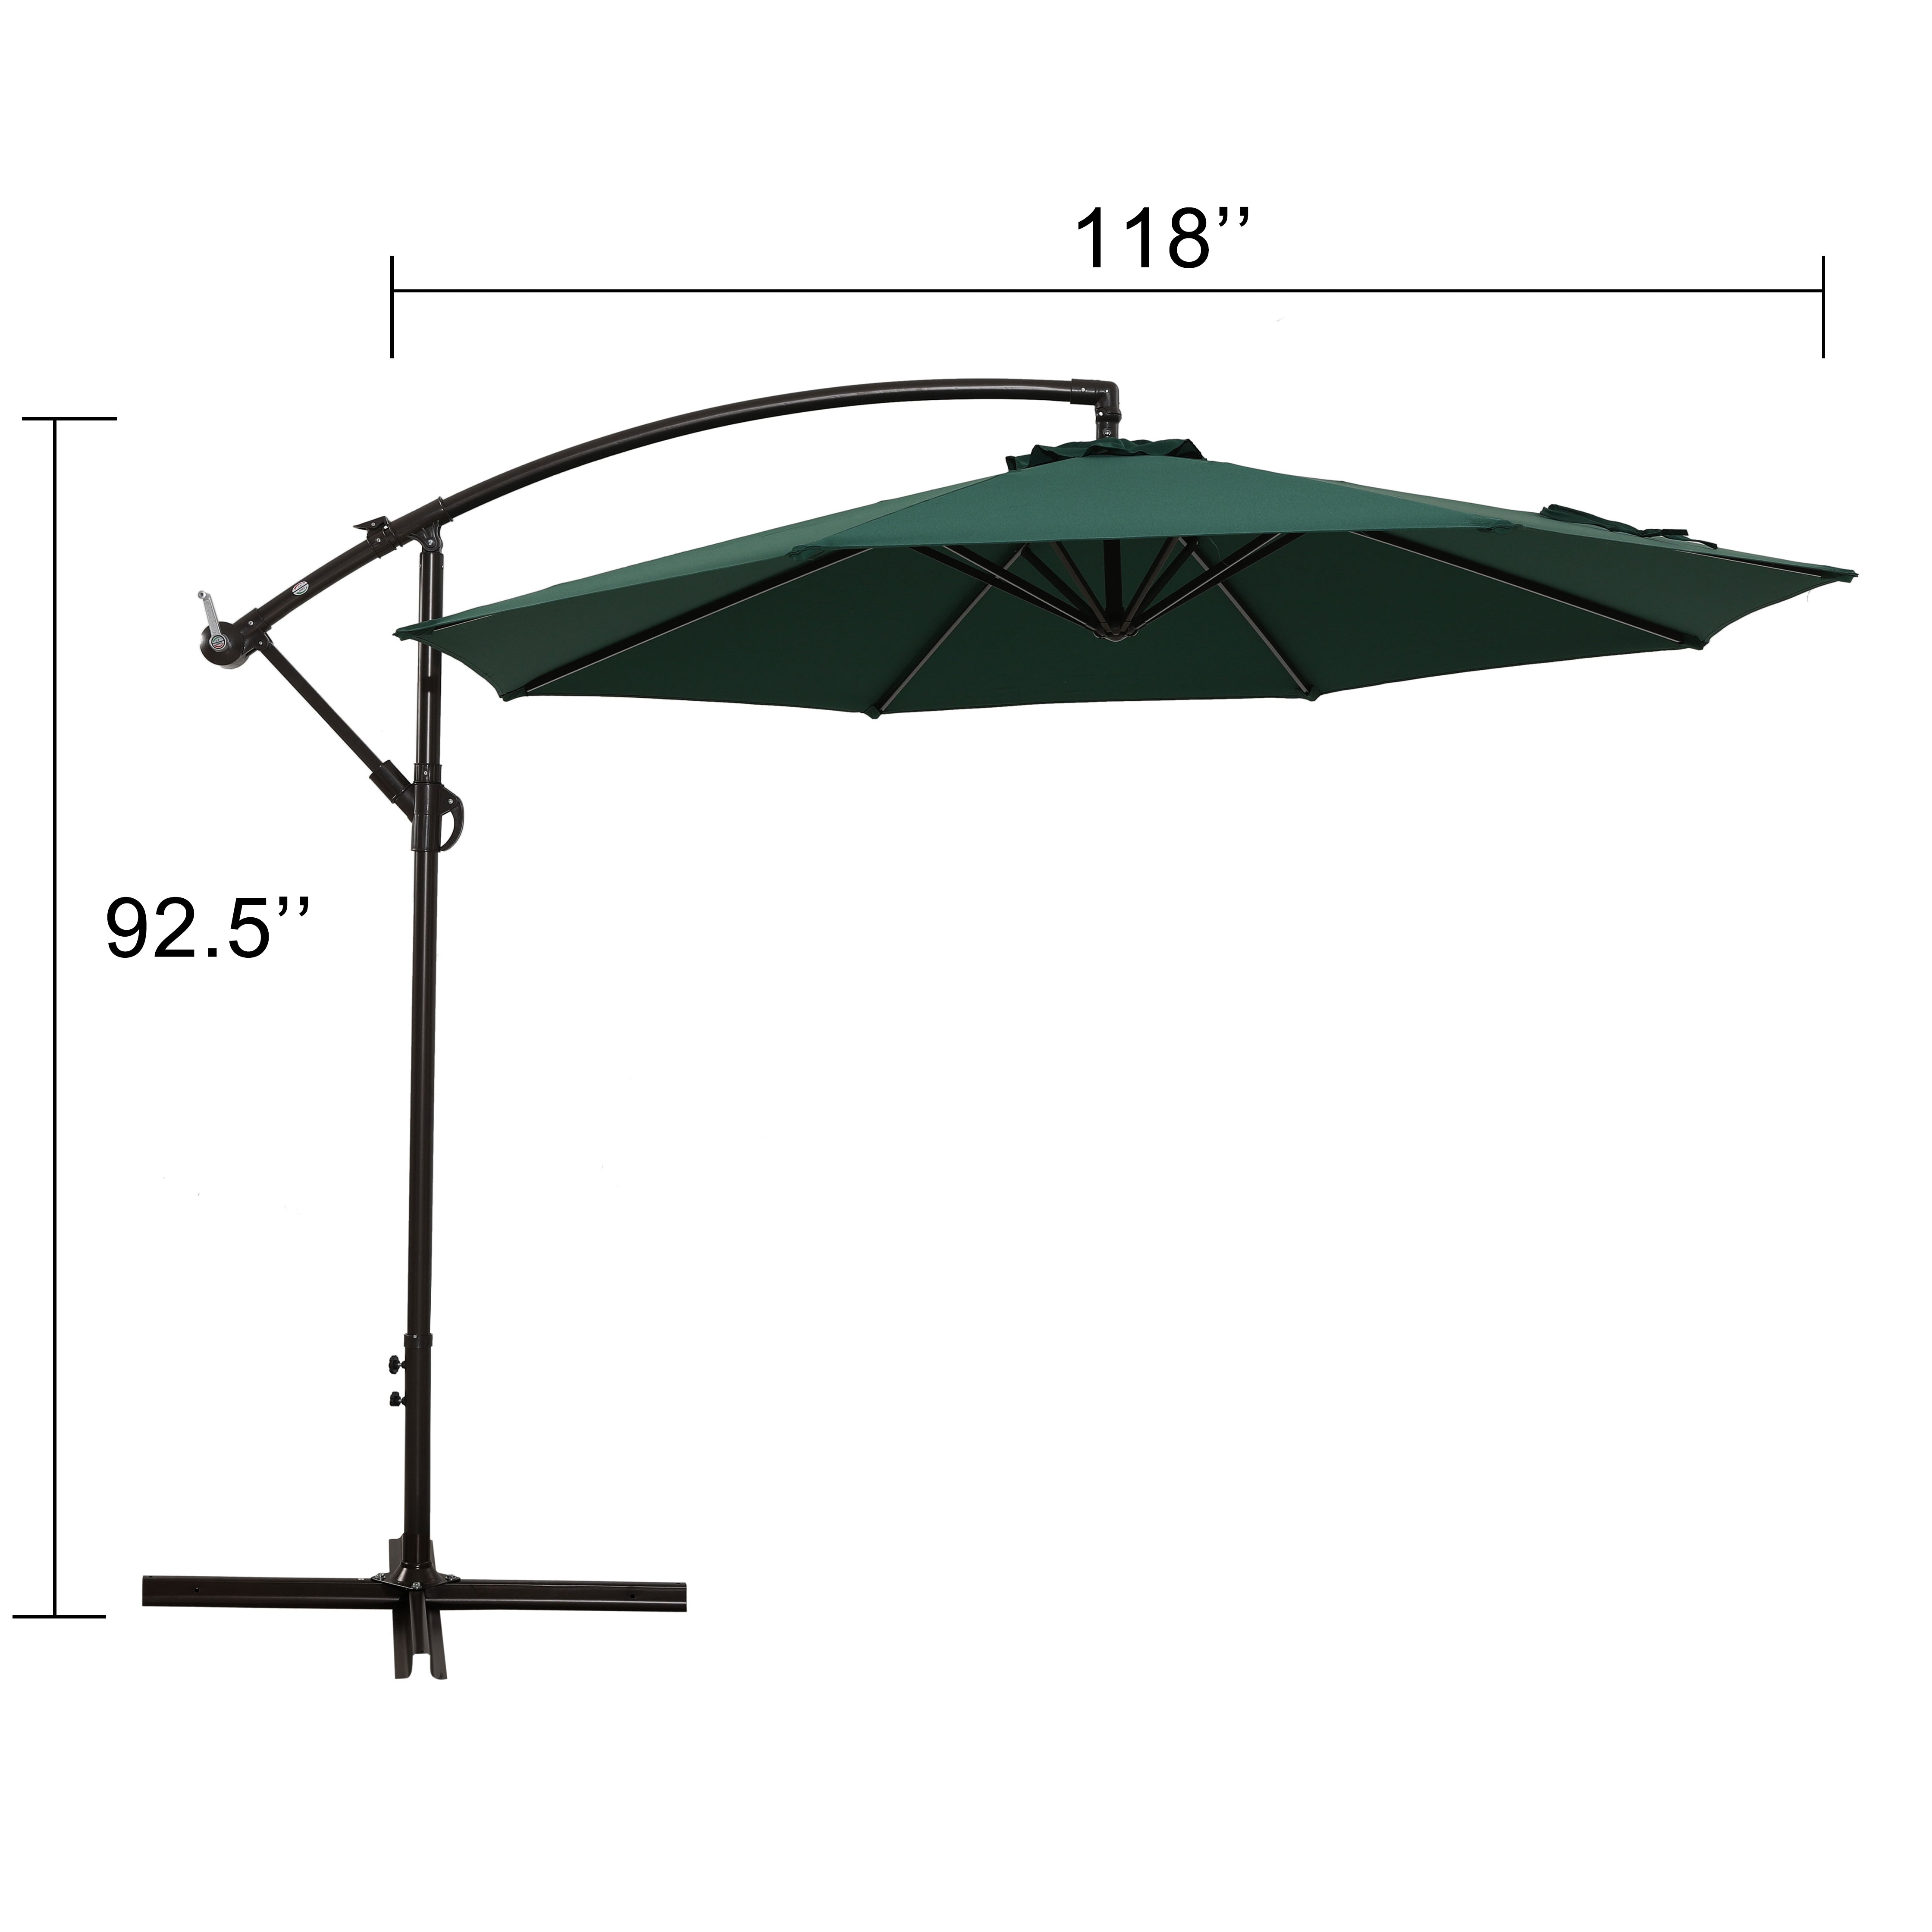 ZNTS 10FT Outdoor Table Market Patio Umbrella for Garden, Deck, Backyard and Pool UMB-10FT-DG